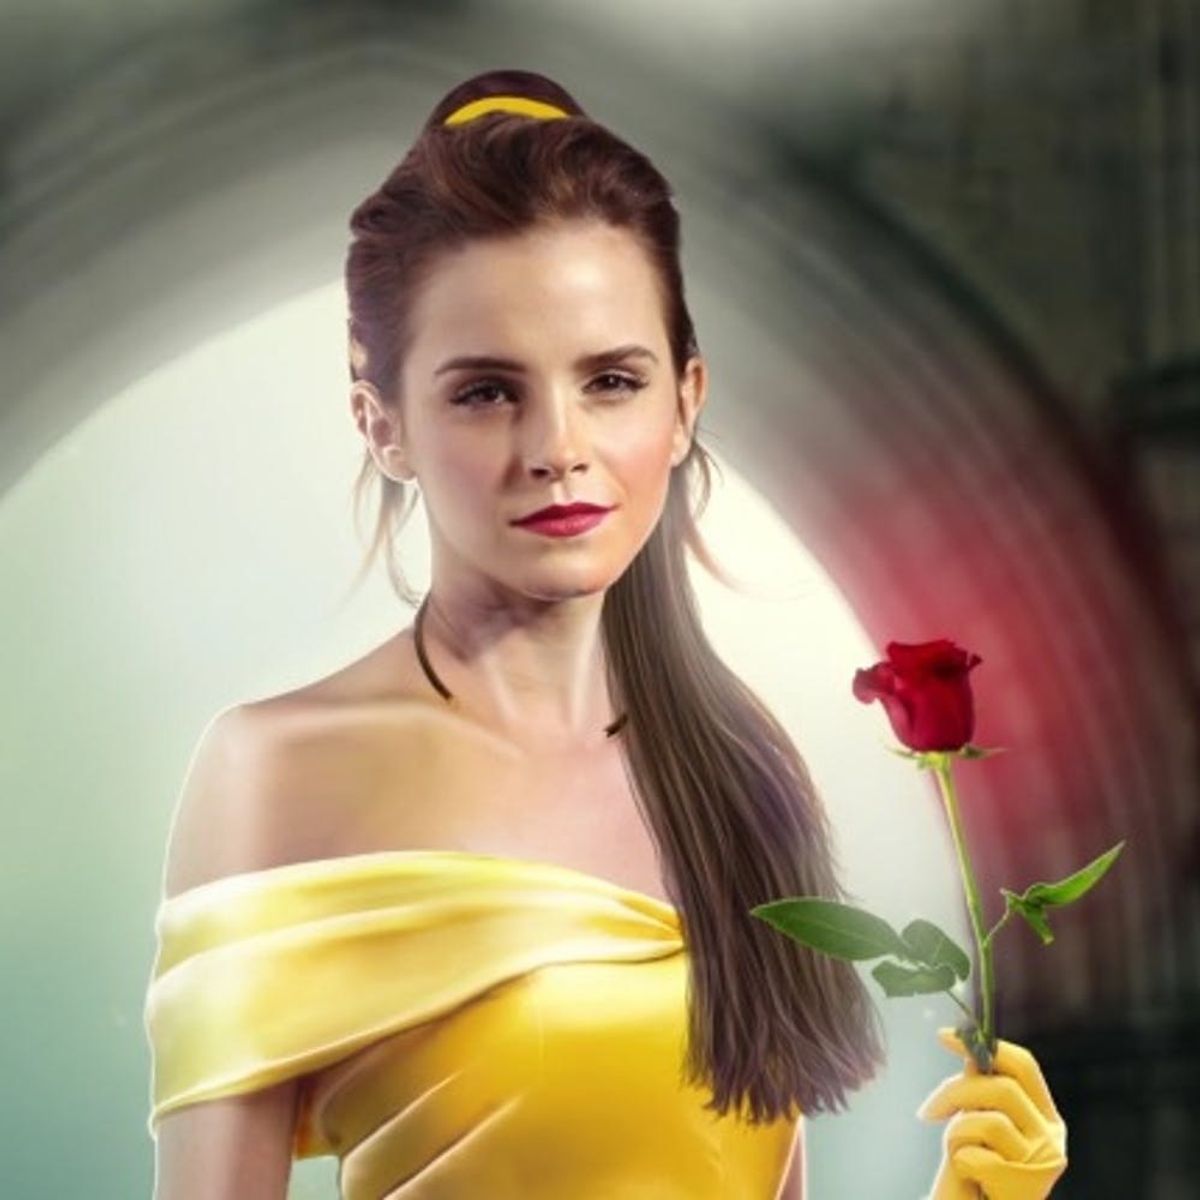 WTF?! Emma Watson’s Beauty and the Beast Doll Looks Like Justin Bieber